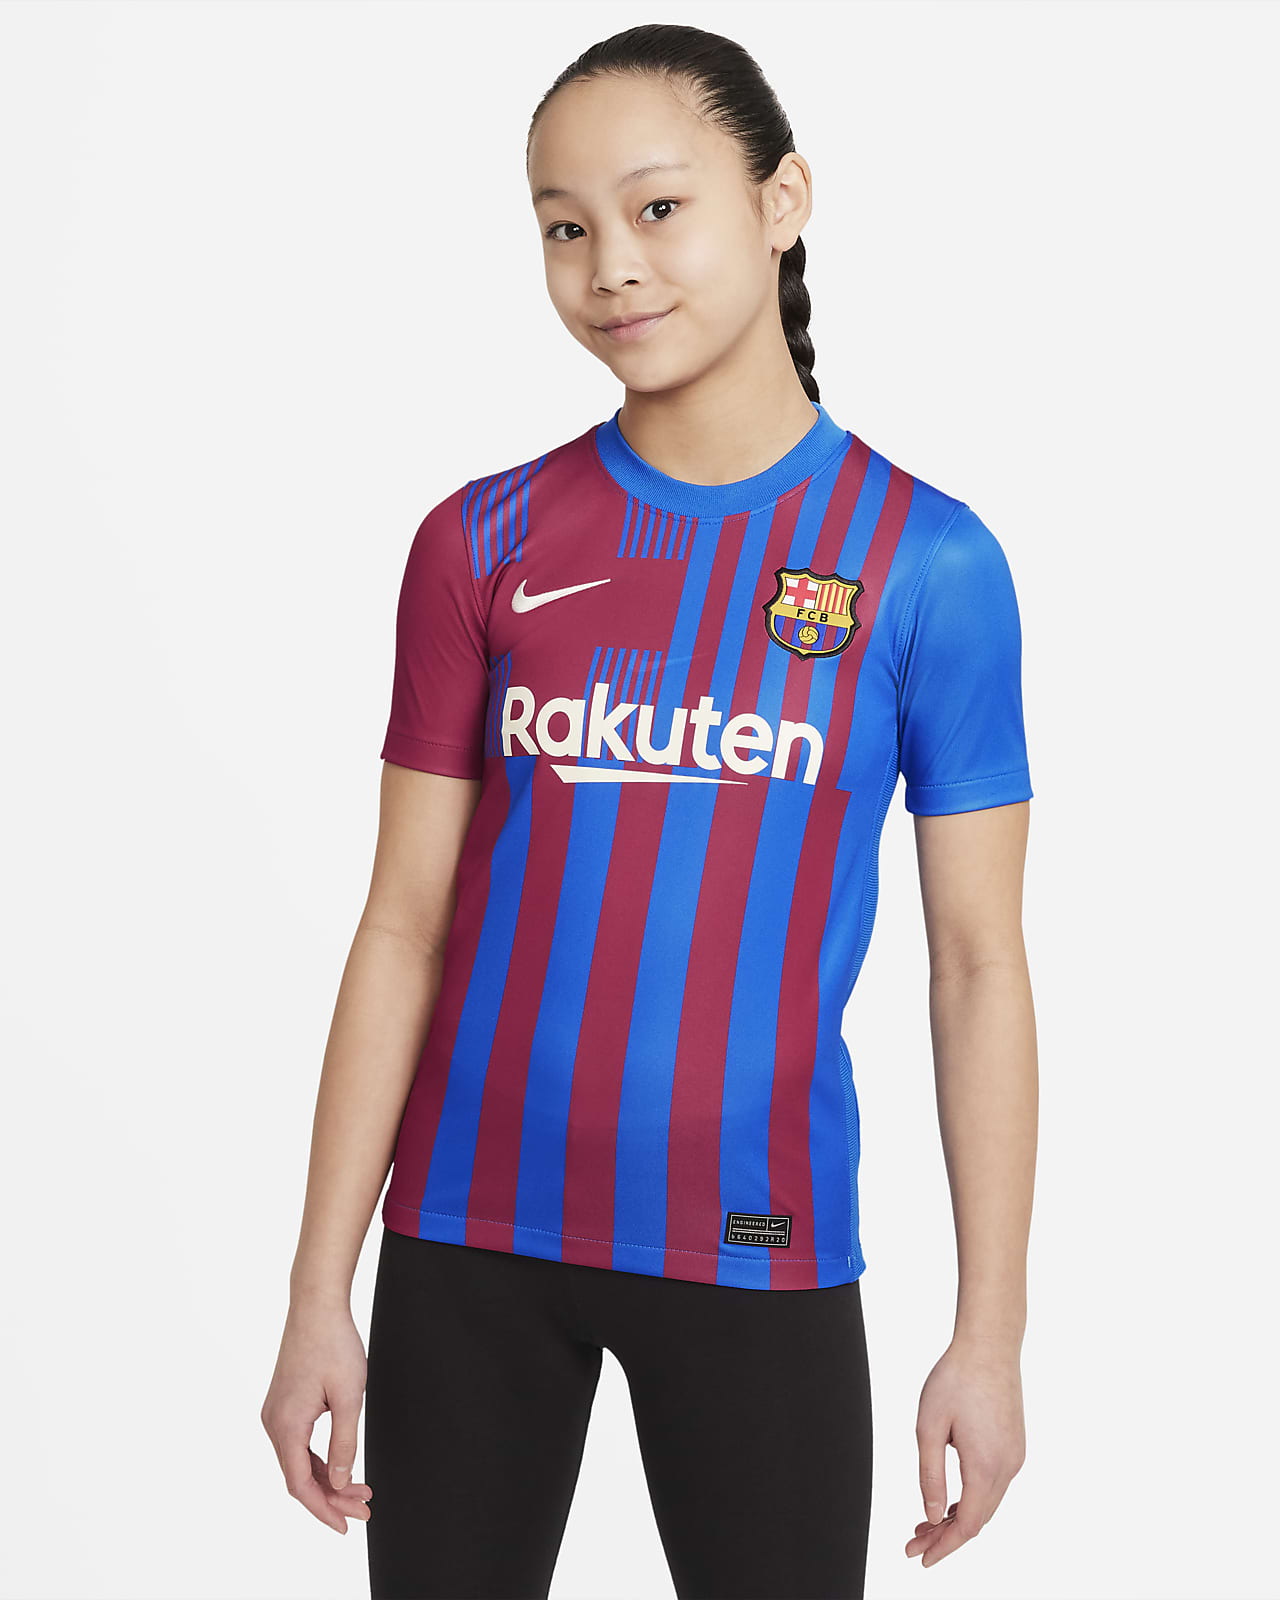 F.C. Barcelona 2021/22 Stadium Home Older Kids' Football Shirt